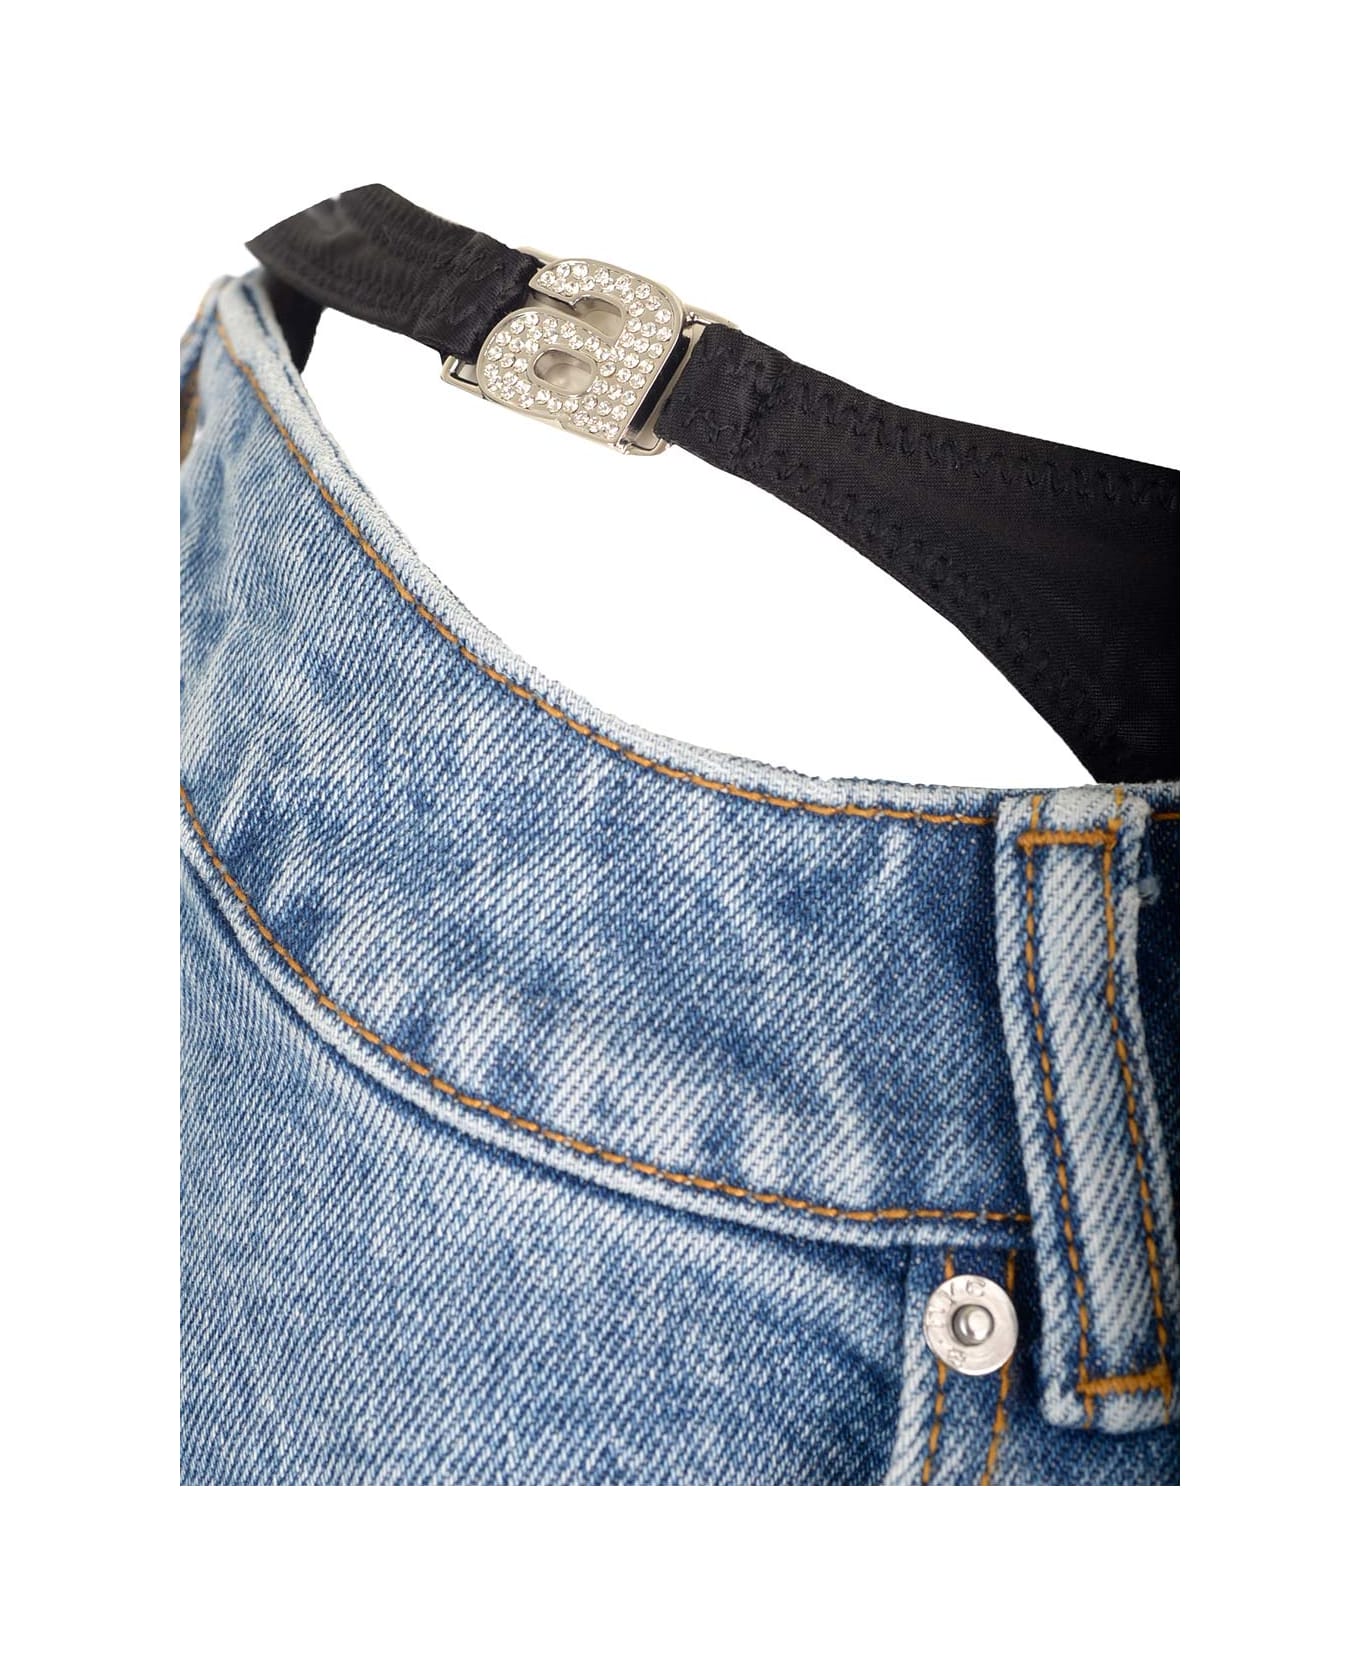 Alexander Wang Visible Underwear Jeans - Blu Denim